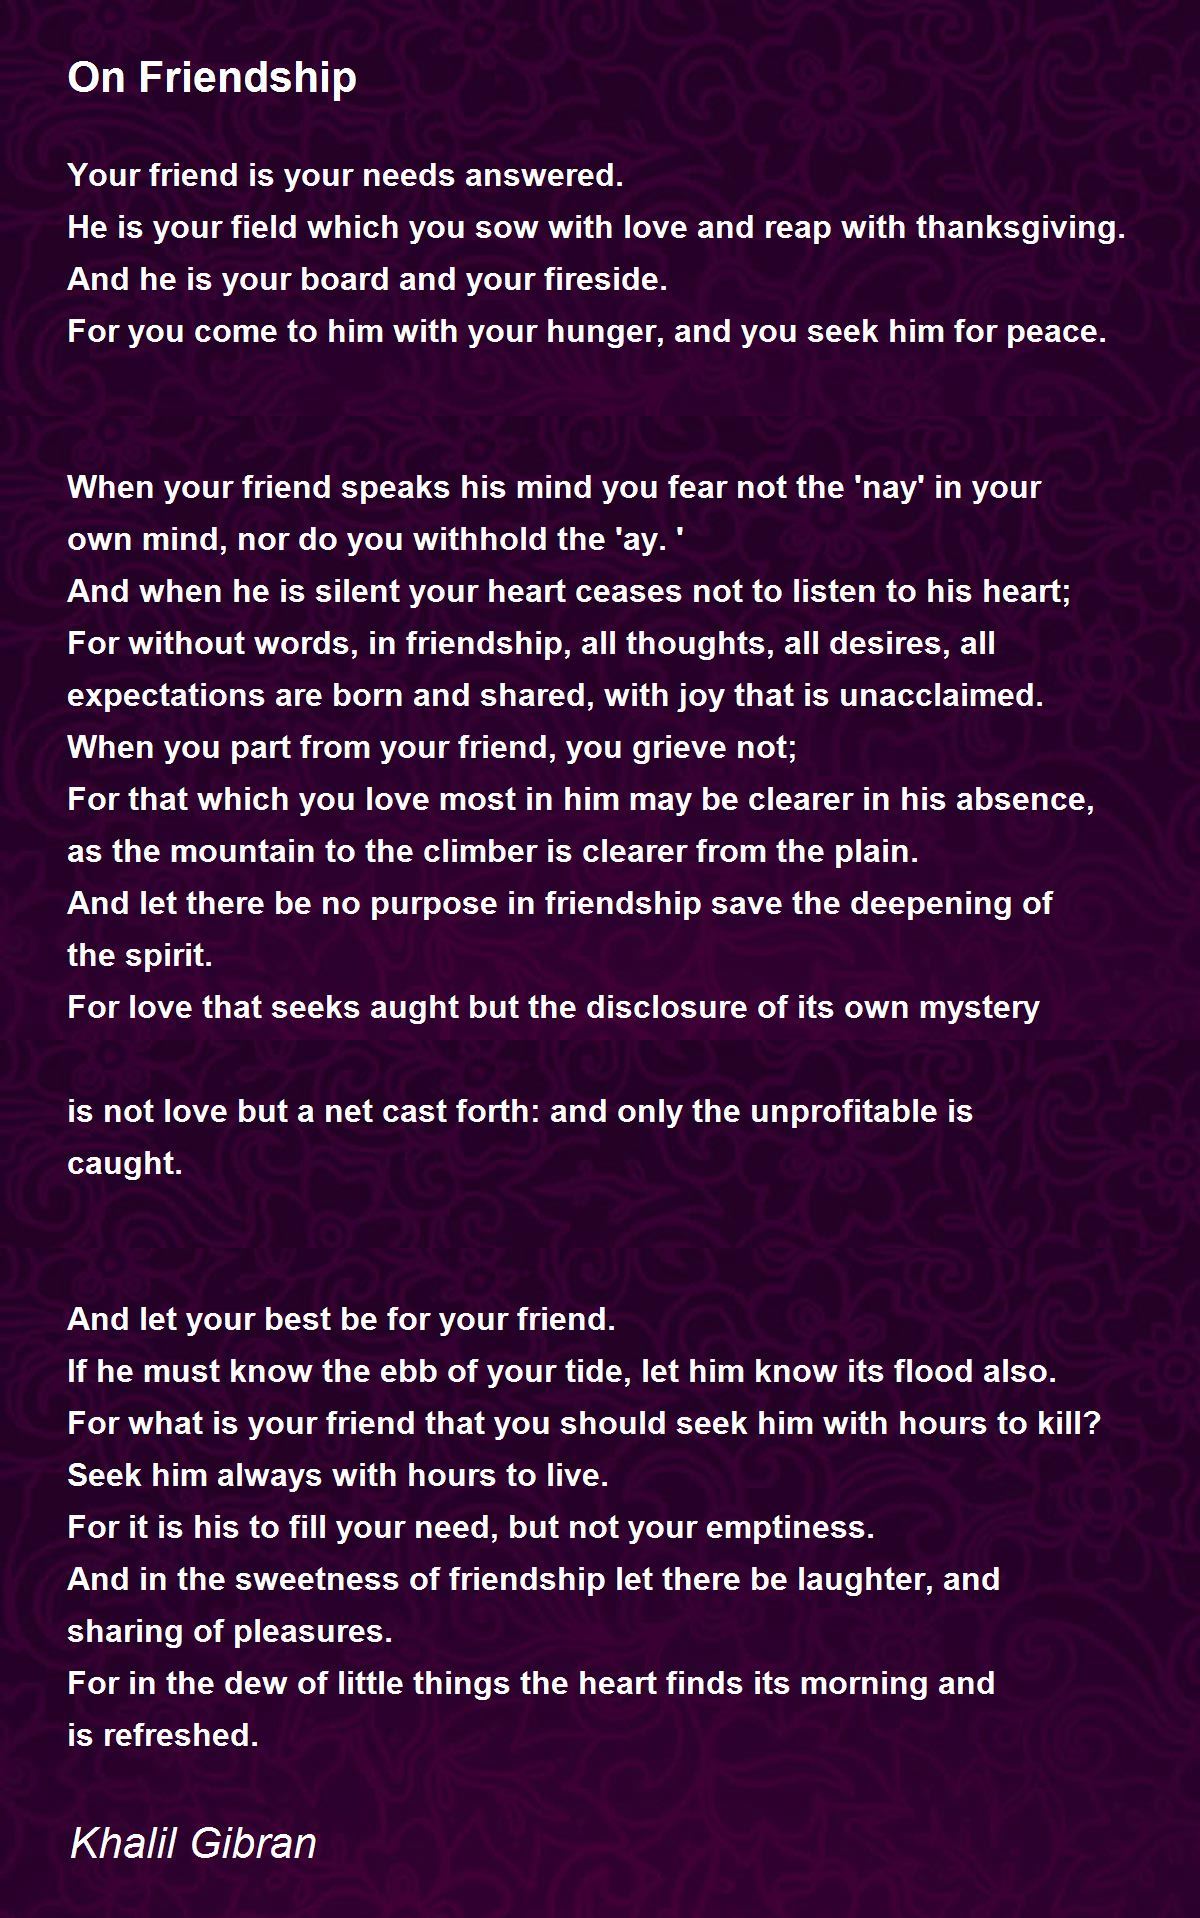 On Friendship Poem by Khalil Gibran - Poem Hunter